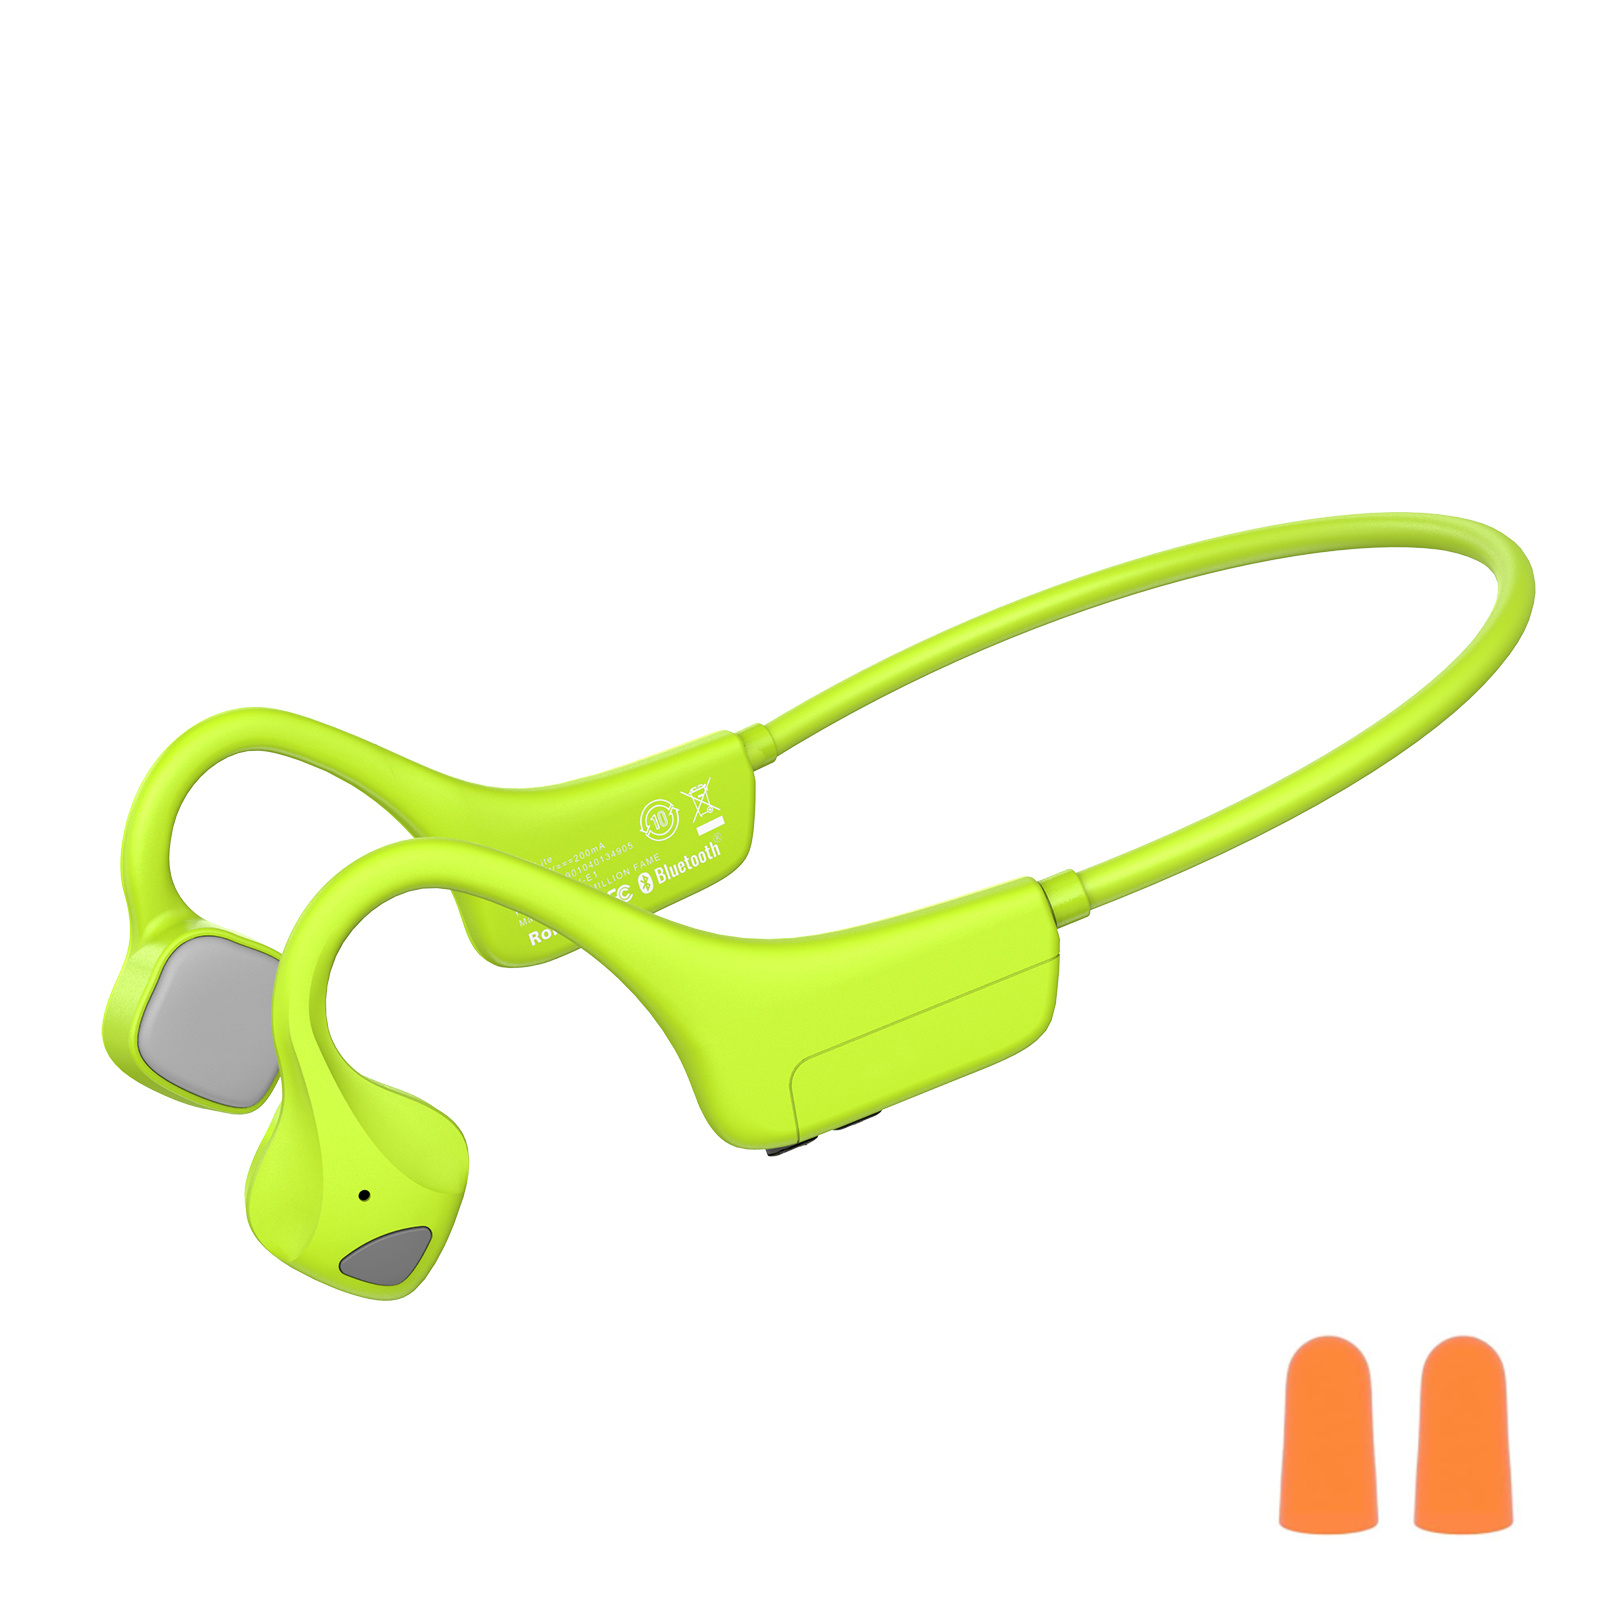 9 DIGITAL Bone Conduction Headphones Bluetooth 5.0,Waterproof Sports Wireless Headset with Built-in Mic,Sweatproof Running Open Ear Headphone for Sports,Cycling,Yoga,Hiking,Climbing & Driving(Green)